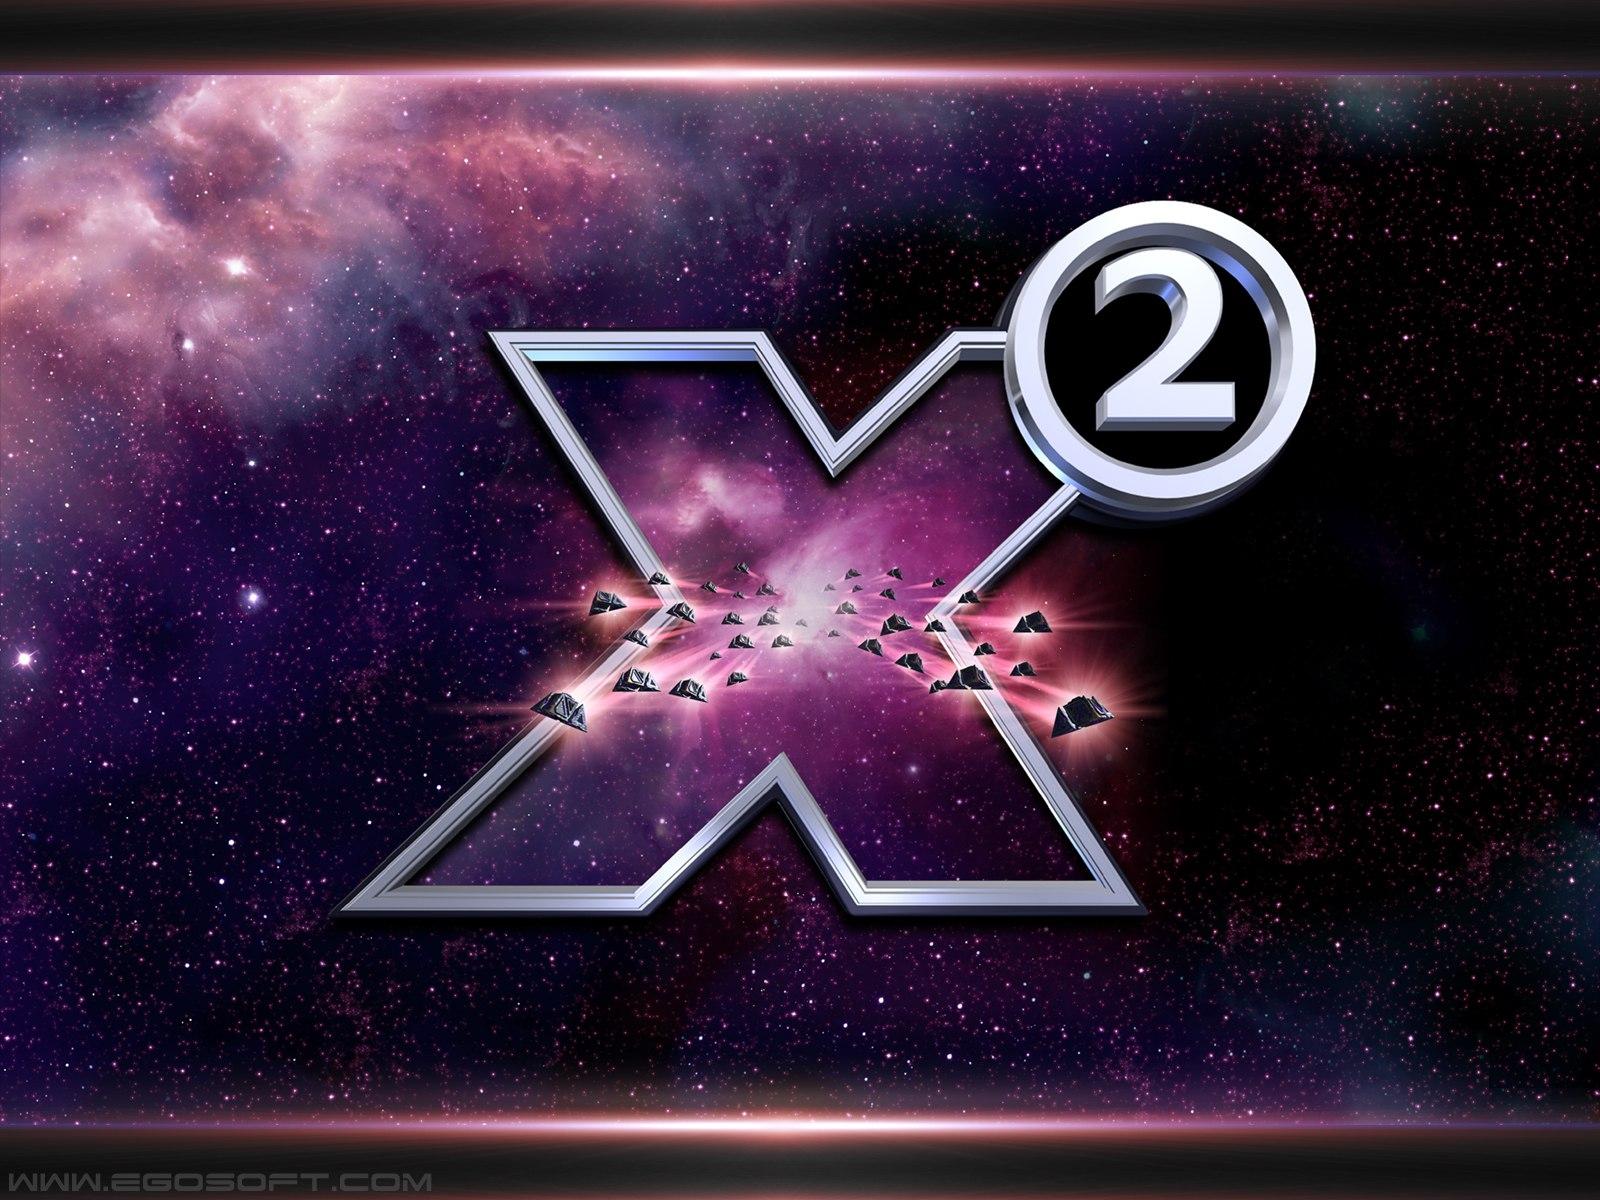 Second x. X2 картинка. X2. Картинки 2х2. X, картинки.